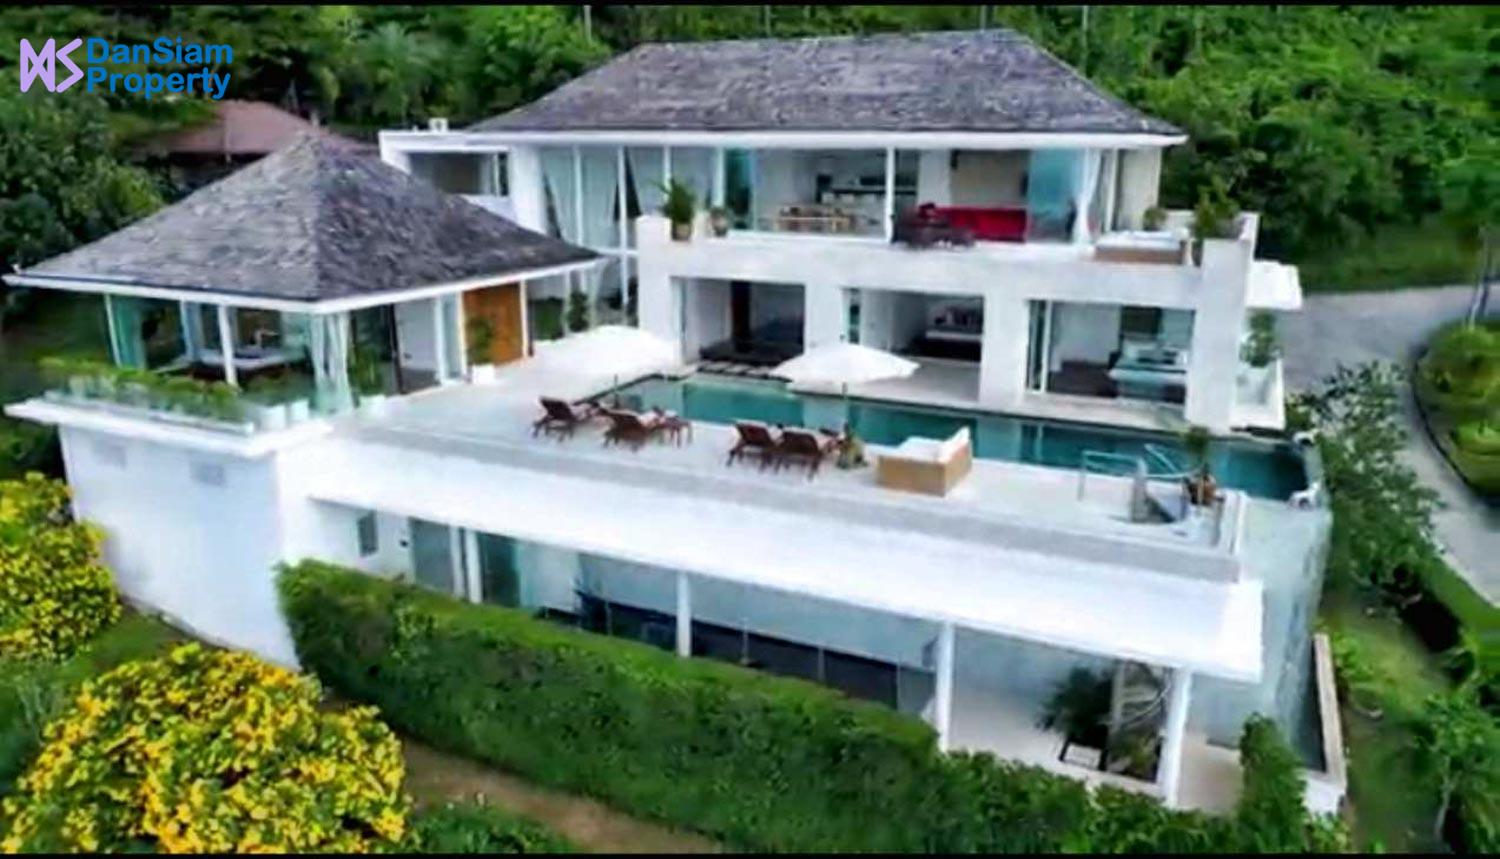 Spectacular Samui Sea View Villa on 1 Rai Land